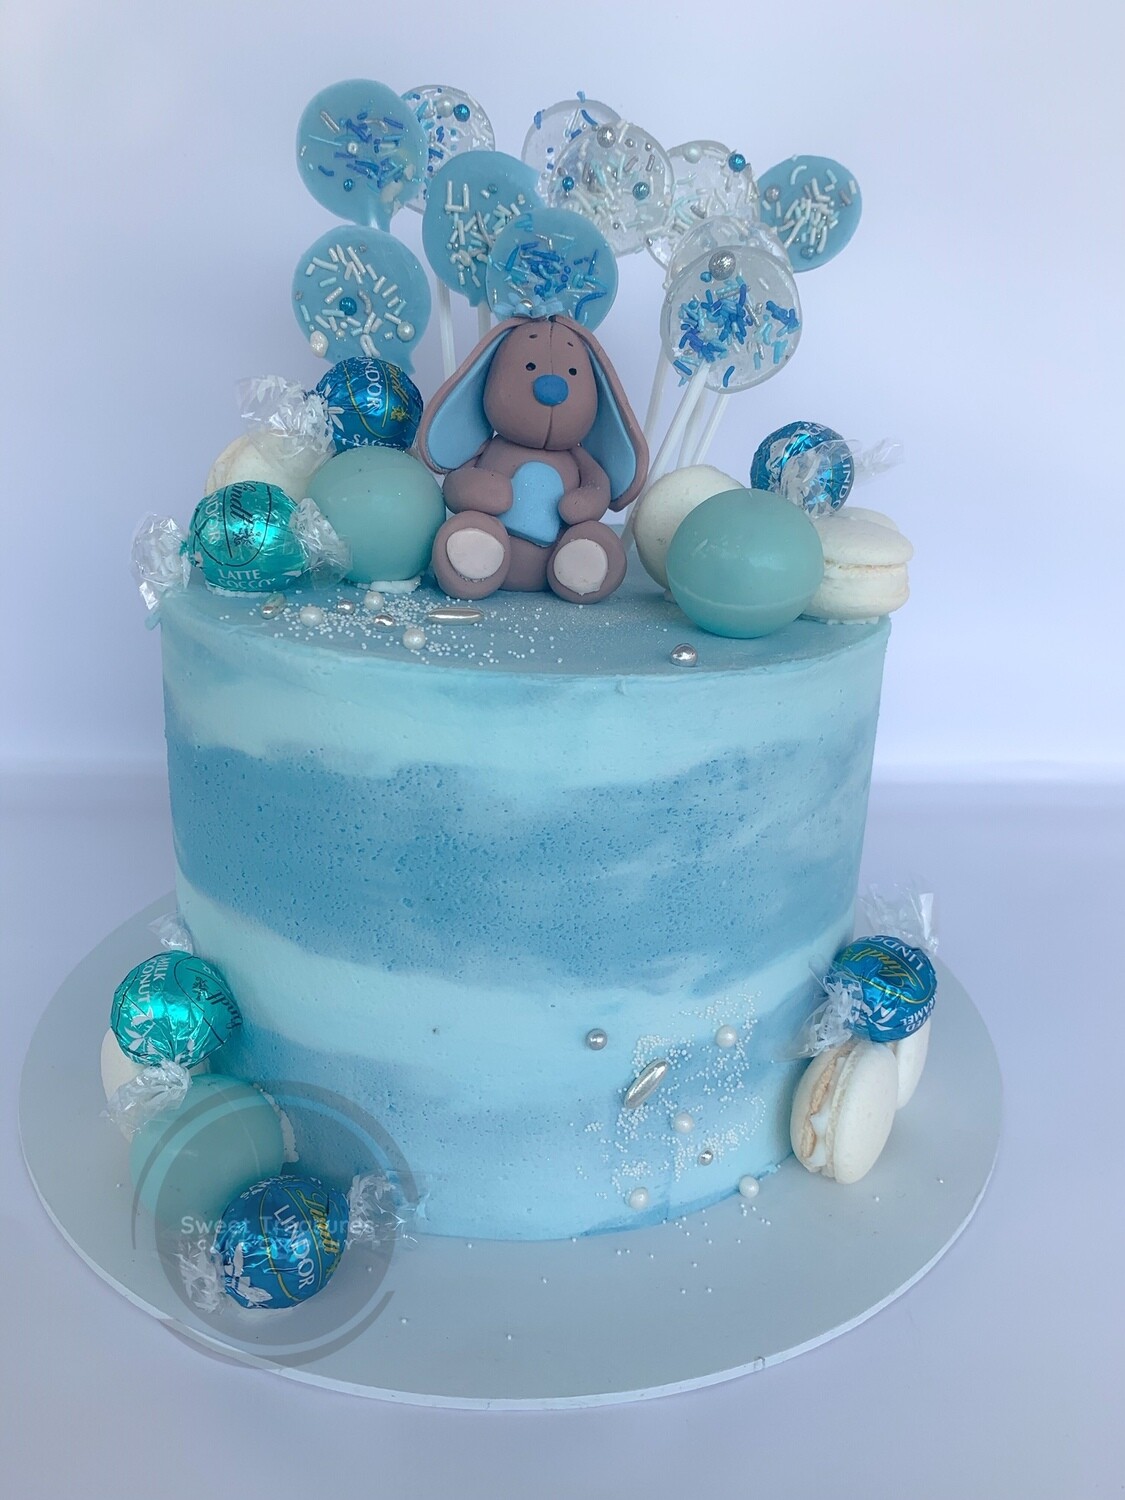 Bunny babyshower Single tier cake